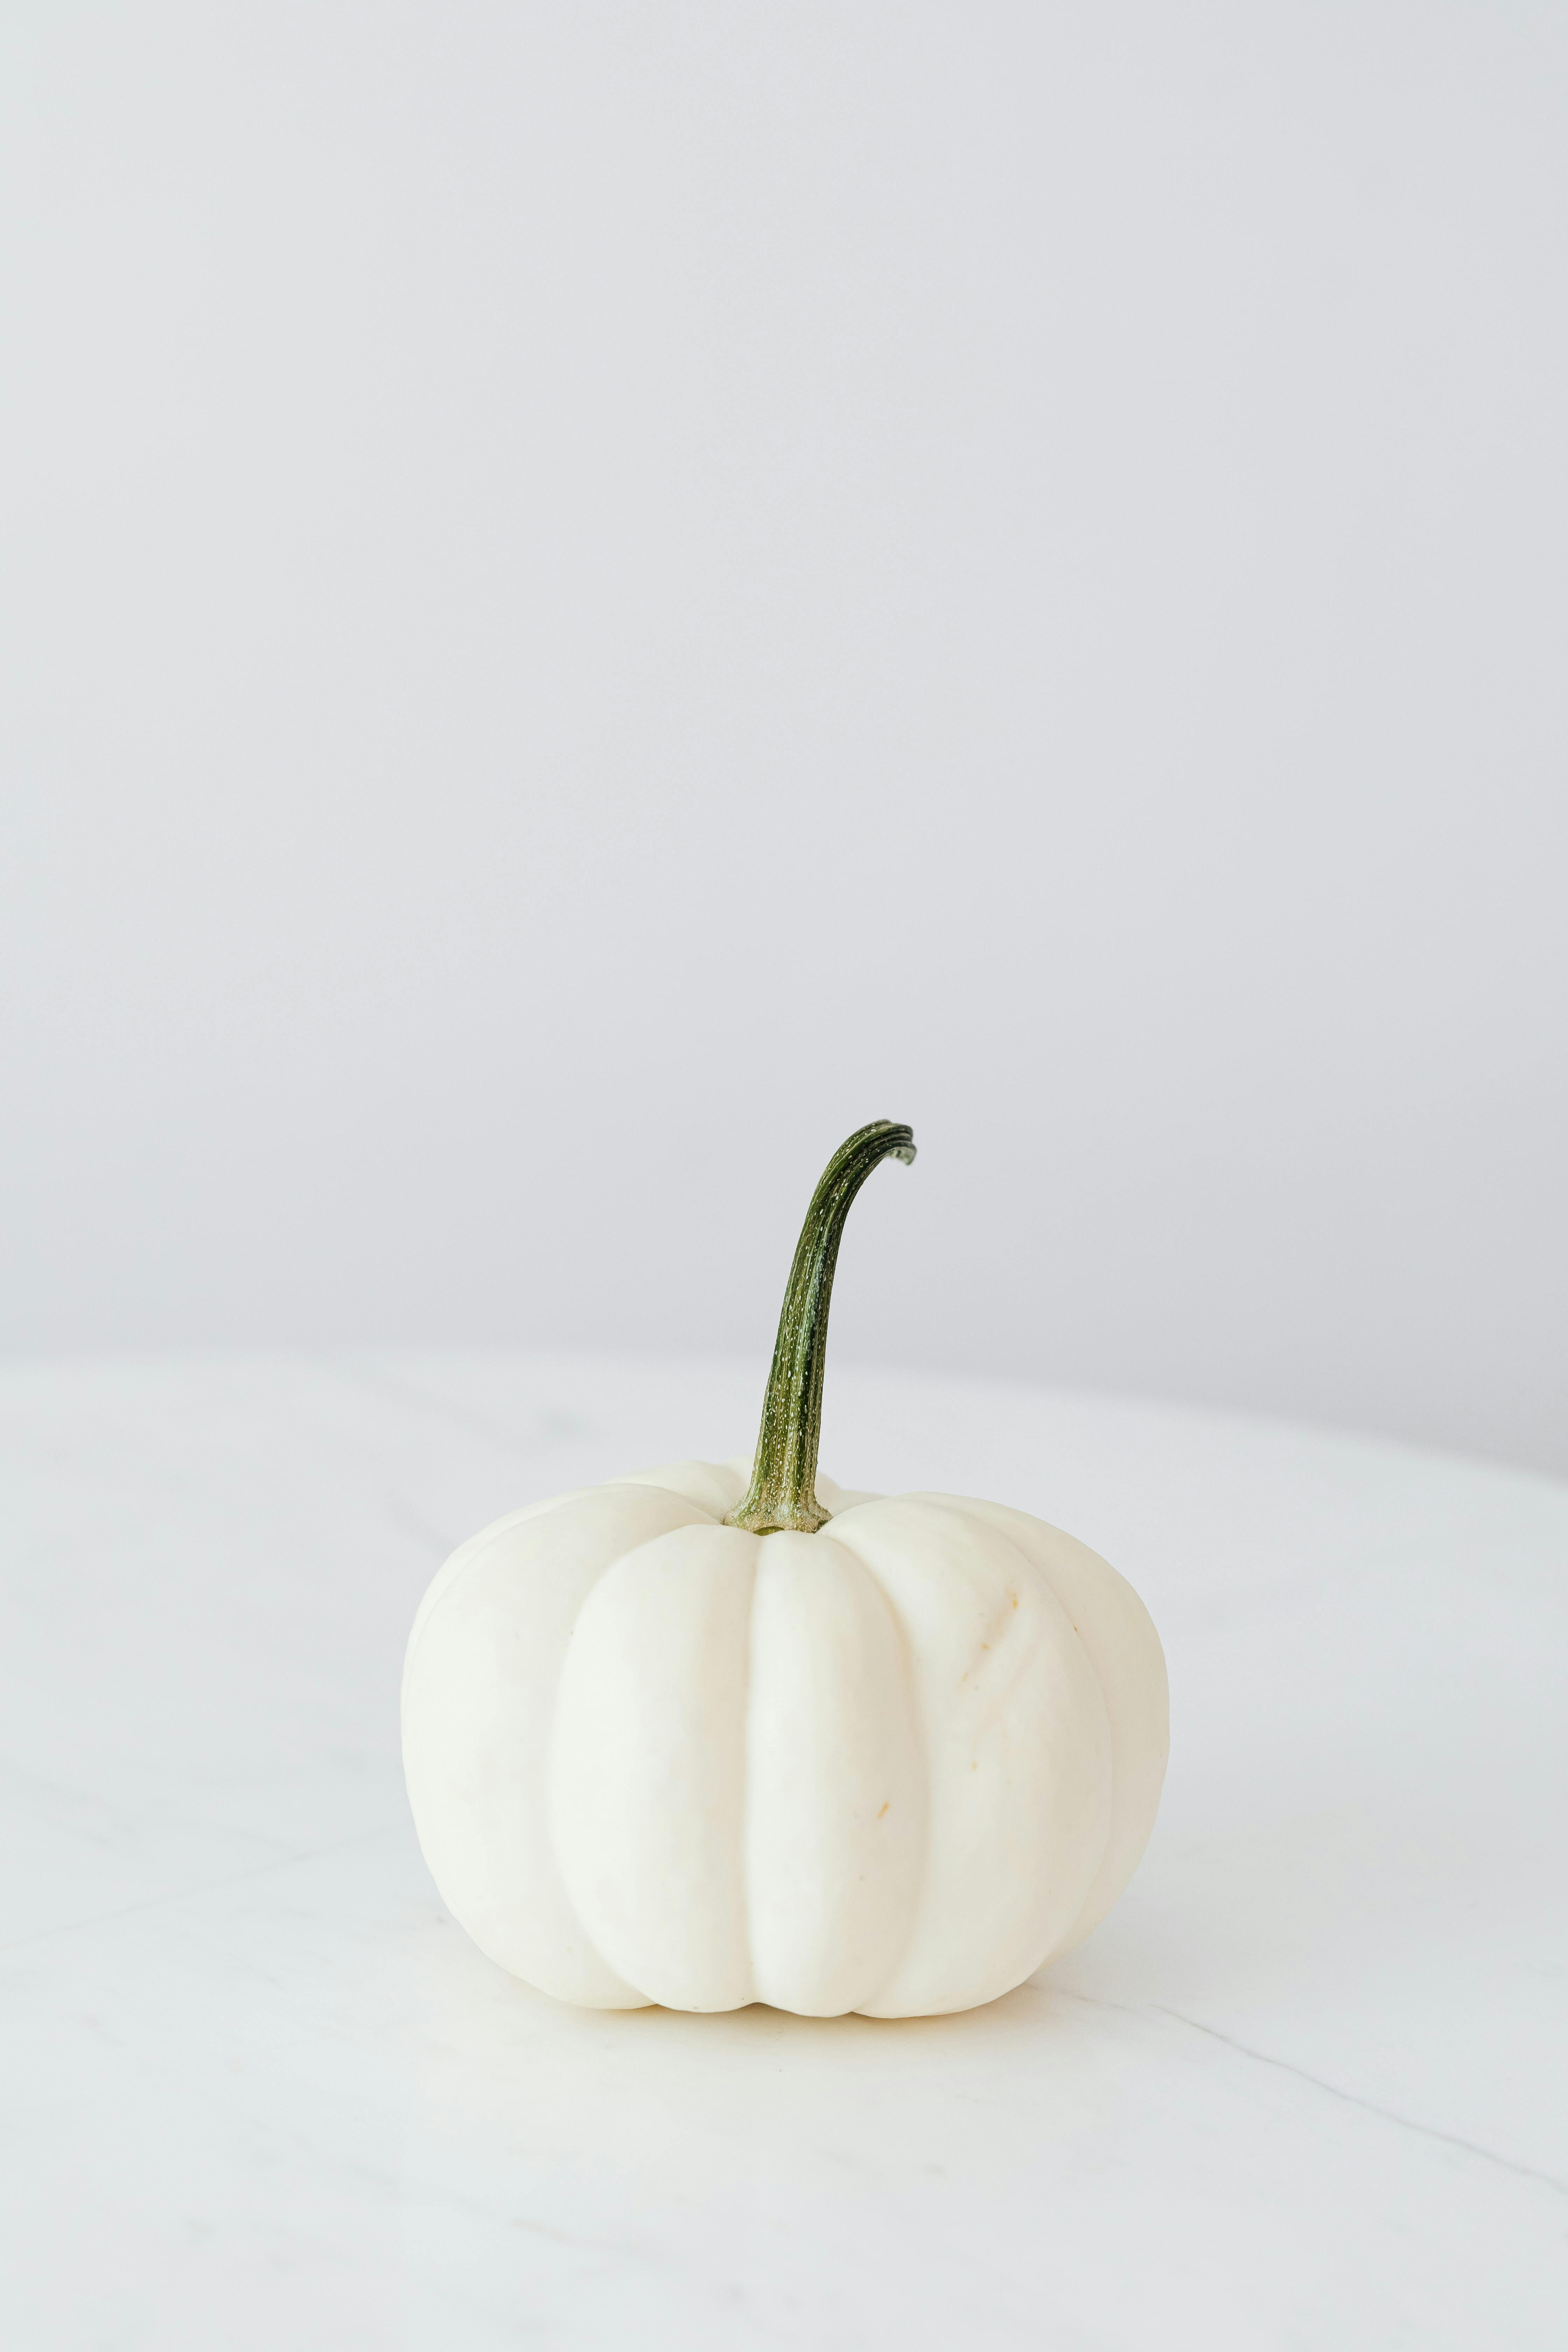 Closeup Beautiful Pale Ghostly White Pumpkins Stock Photo 1191320461   Shutterstock